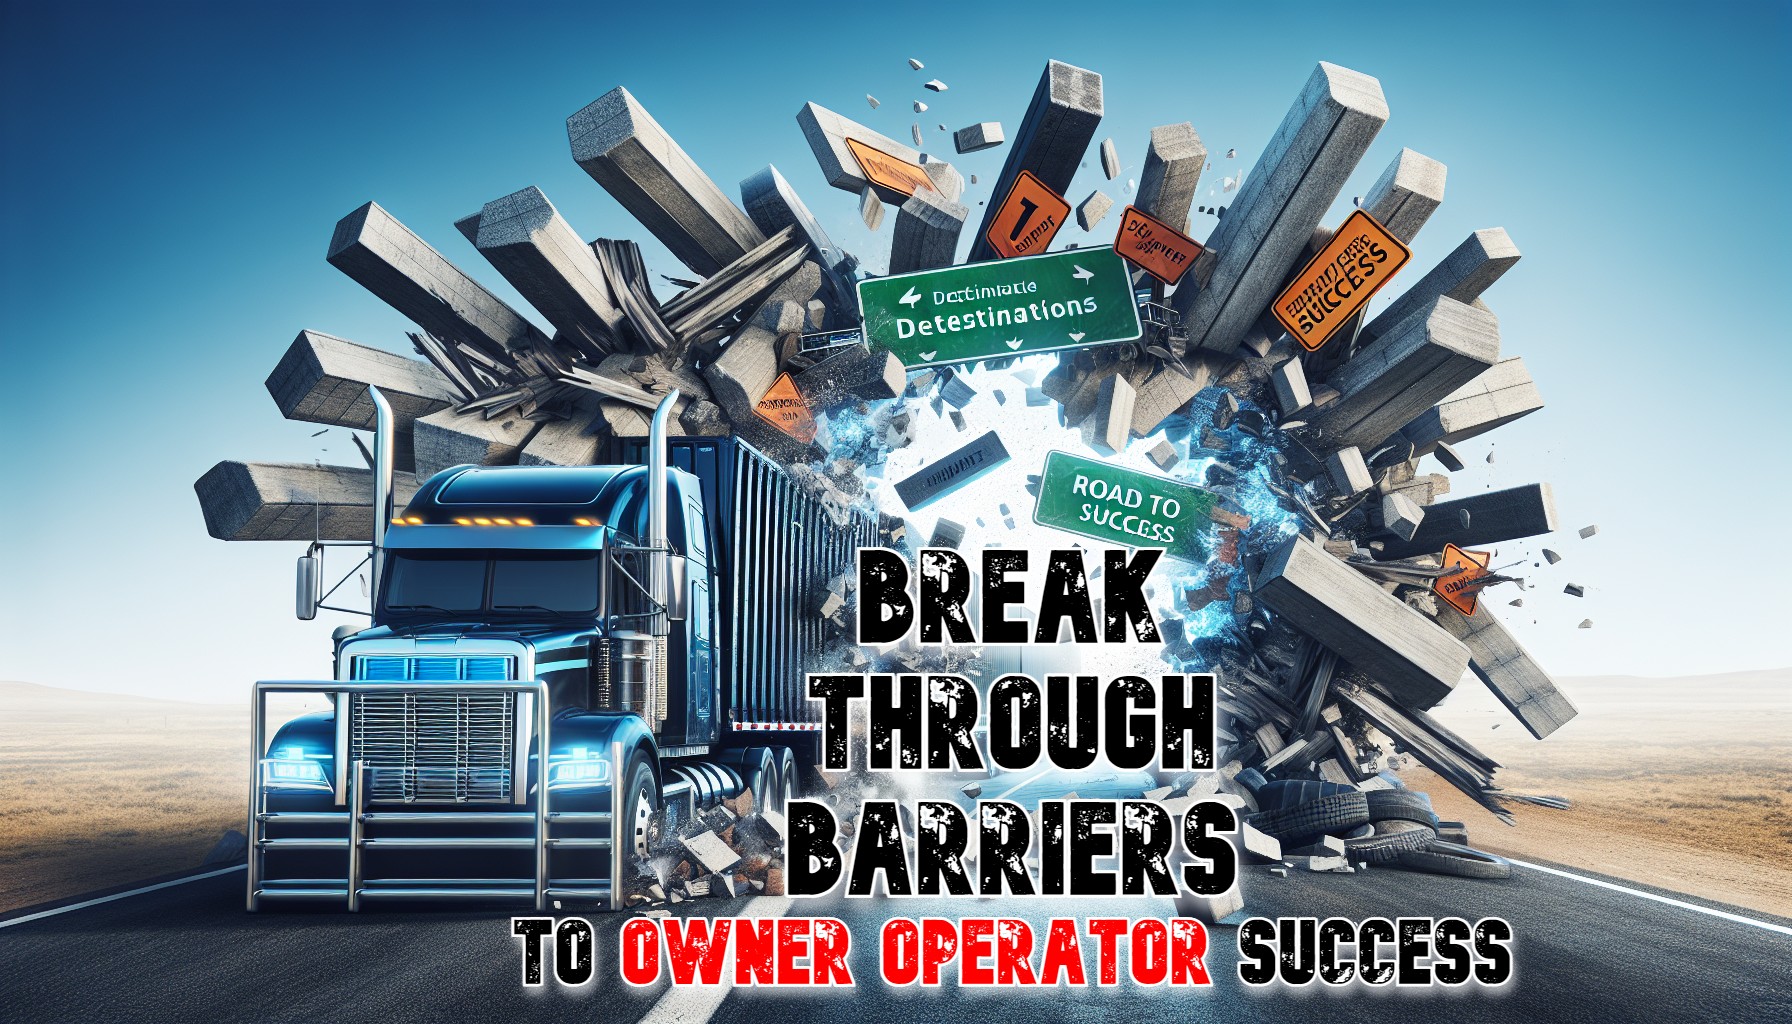 Owner Operator Success